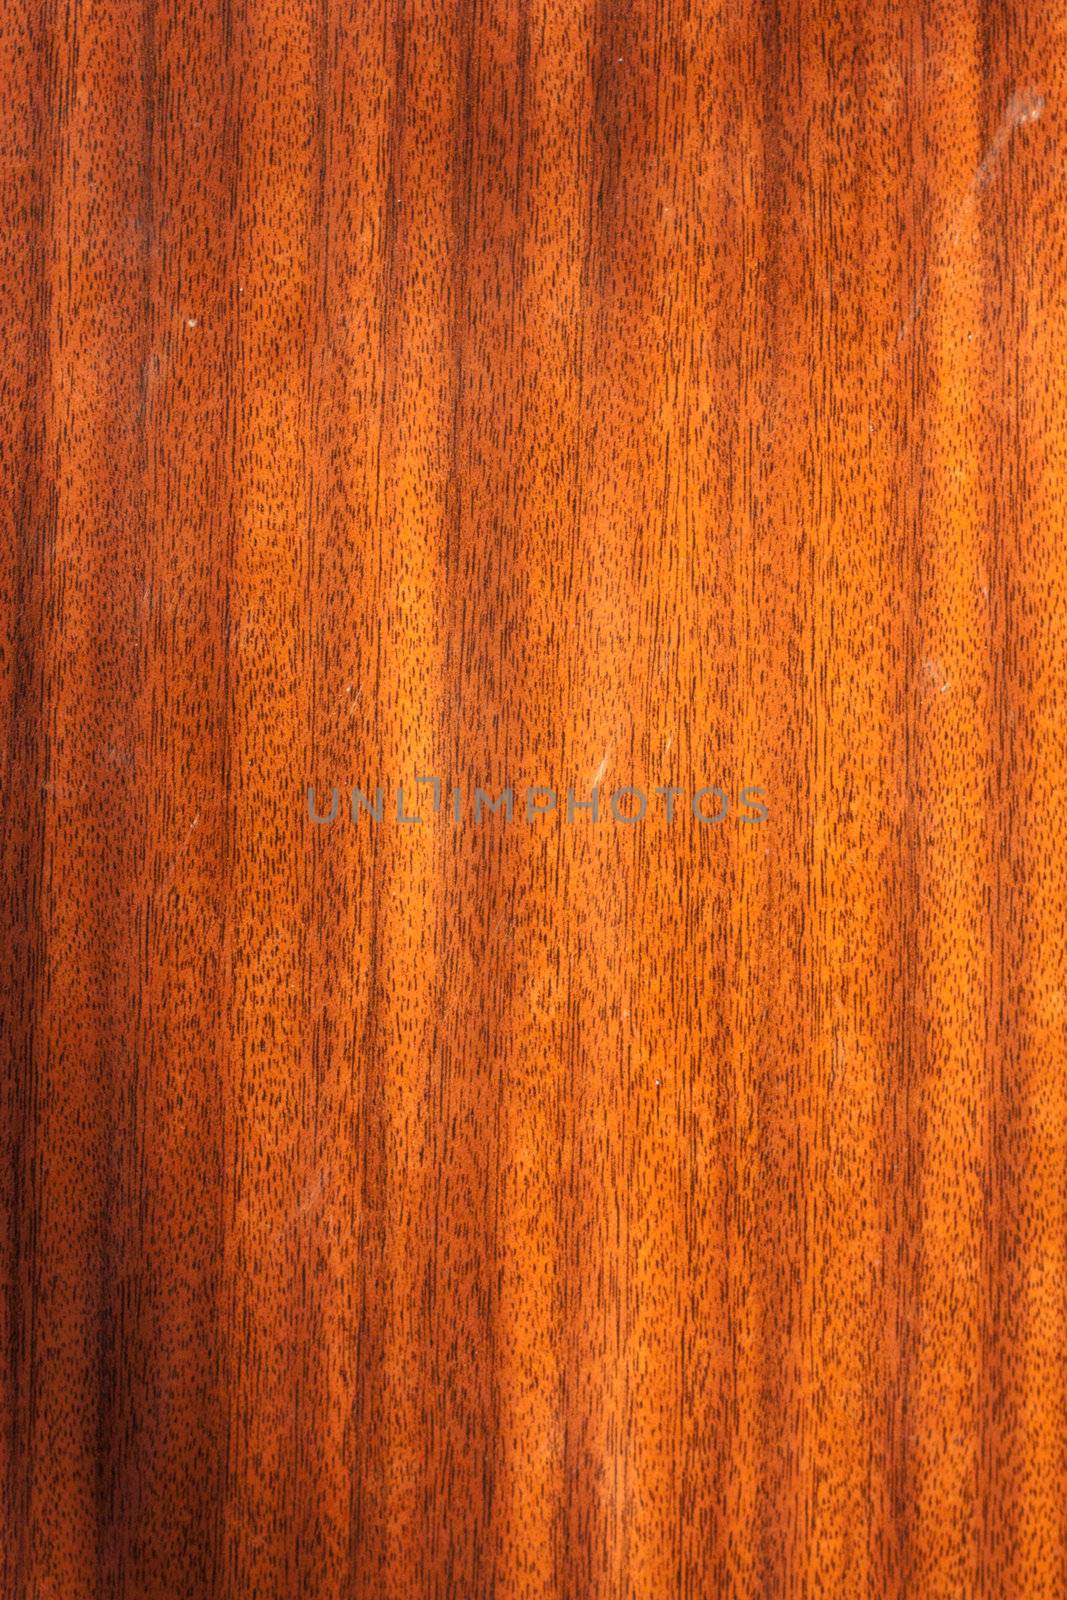 Wood Texture  by schankz